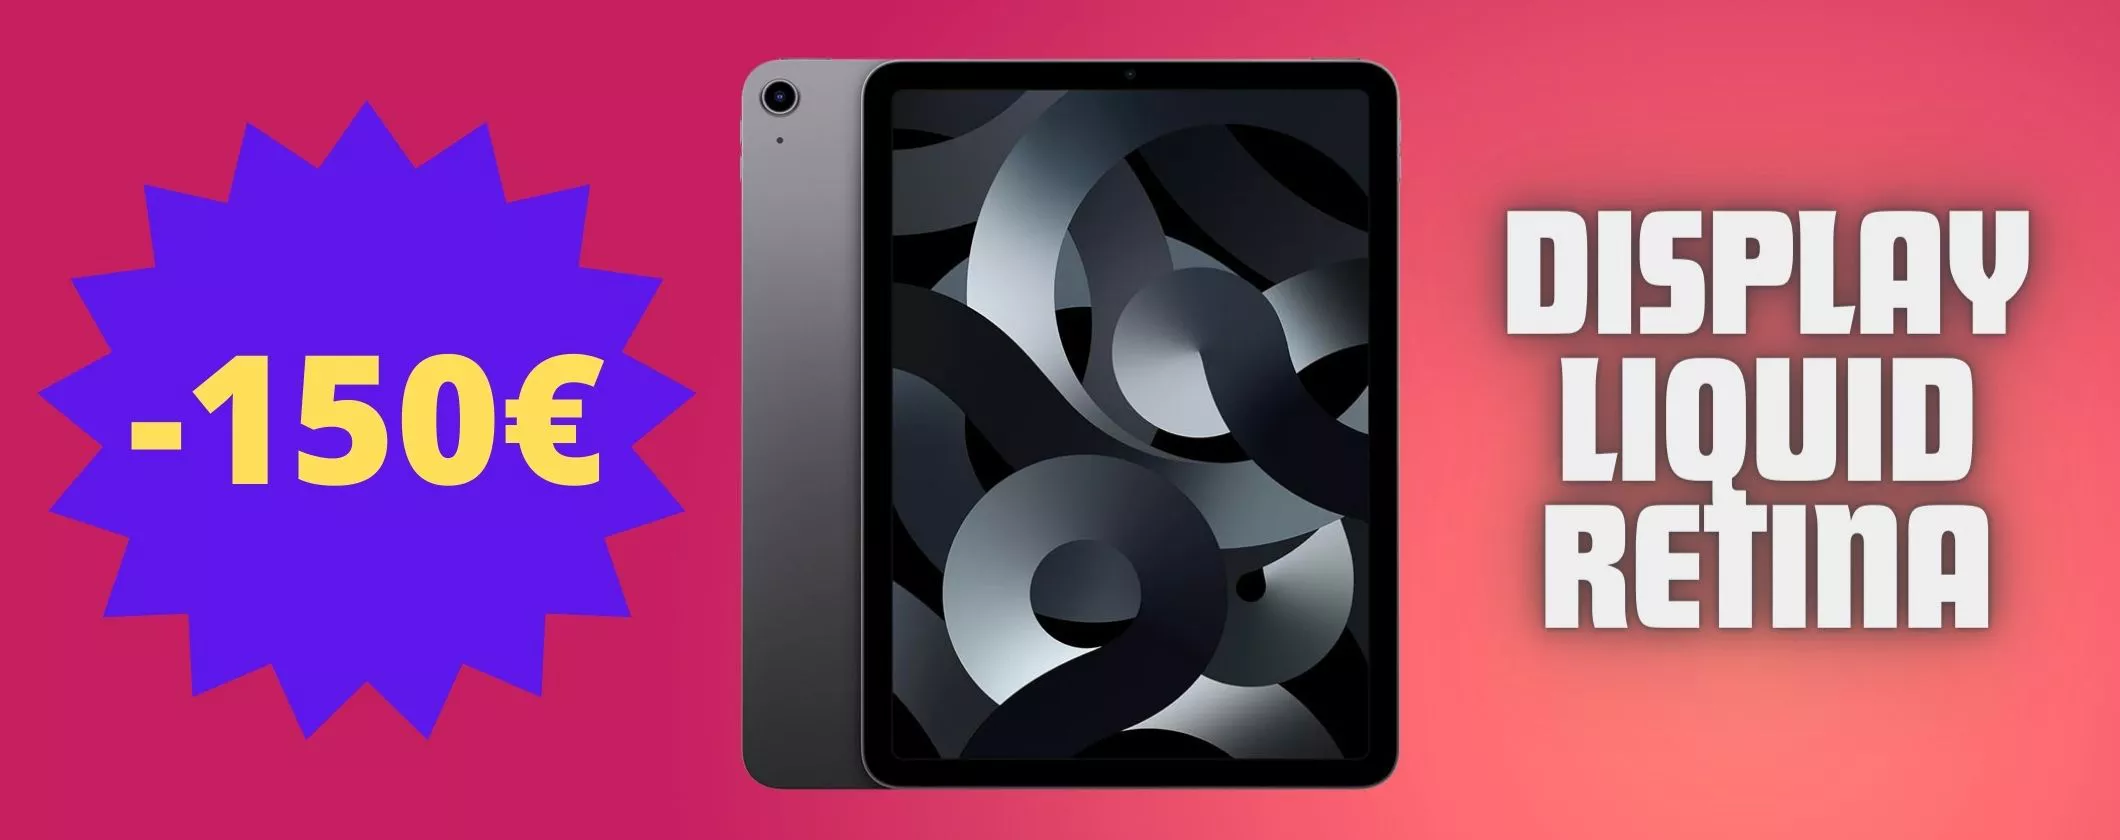 TAGLIO DI 150€ su iPad Air: chip M1 e display Liquid Retina